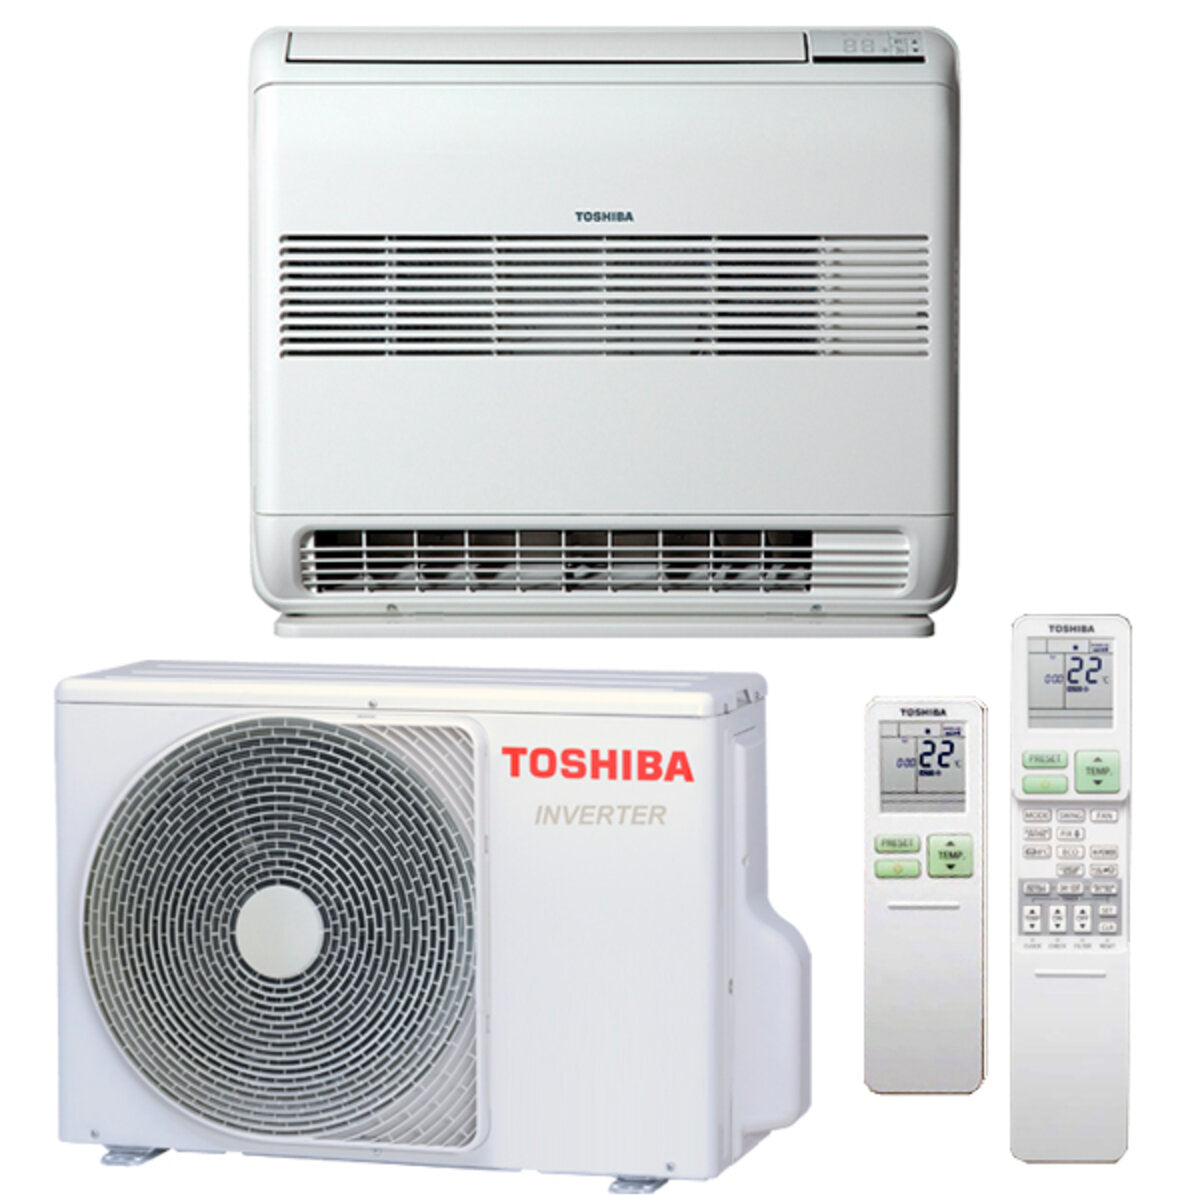 Toshiba Console J2 12000 BTU air conditioner A ++ inverter